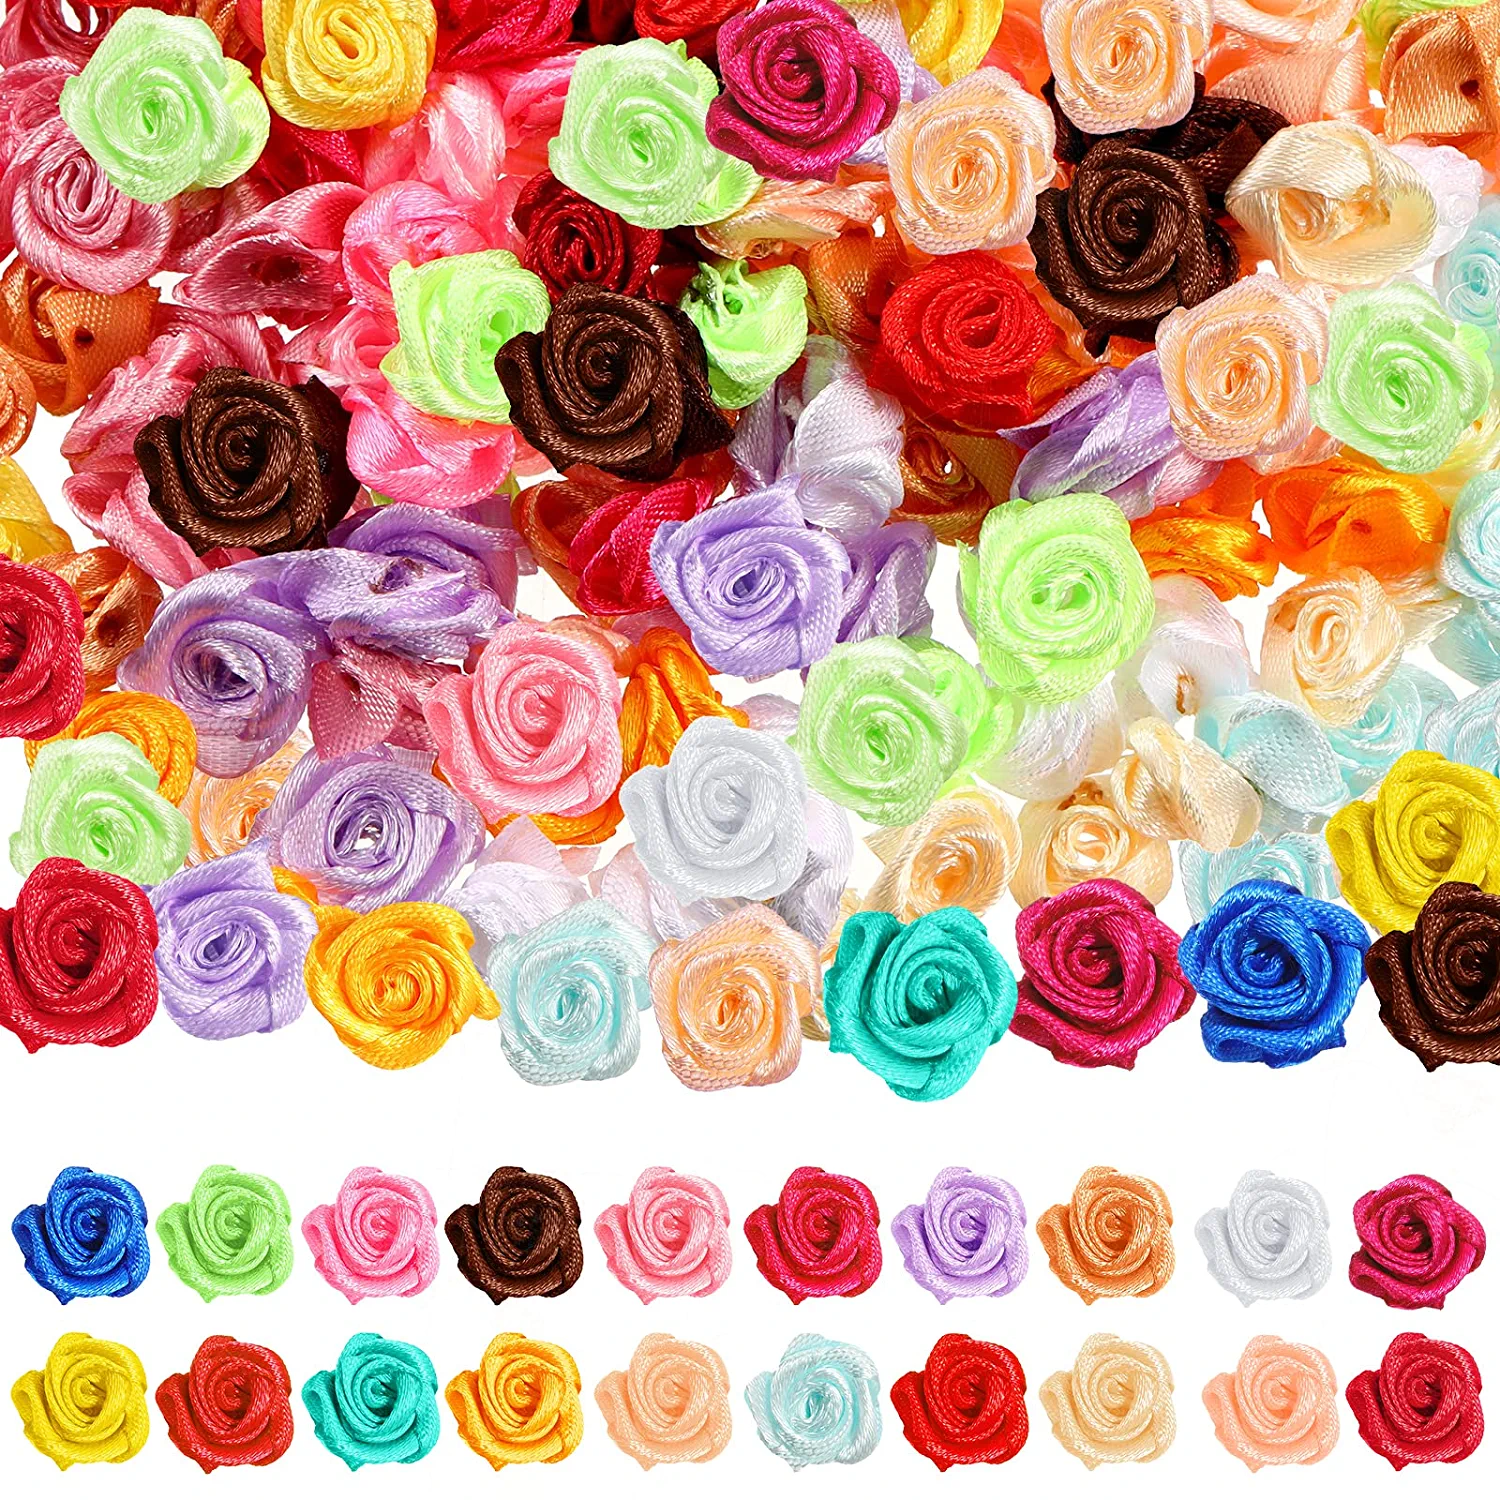 300 Pcs Mini Satin Ribbon Roses, Small Fabric Flowers For Crafts Diy Sat... - $19.99